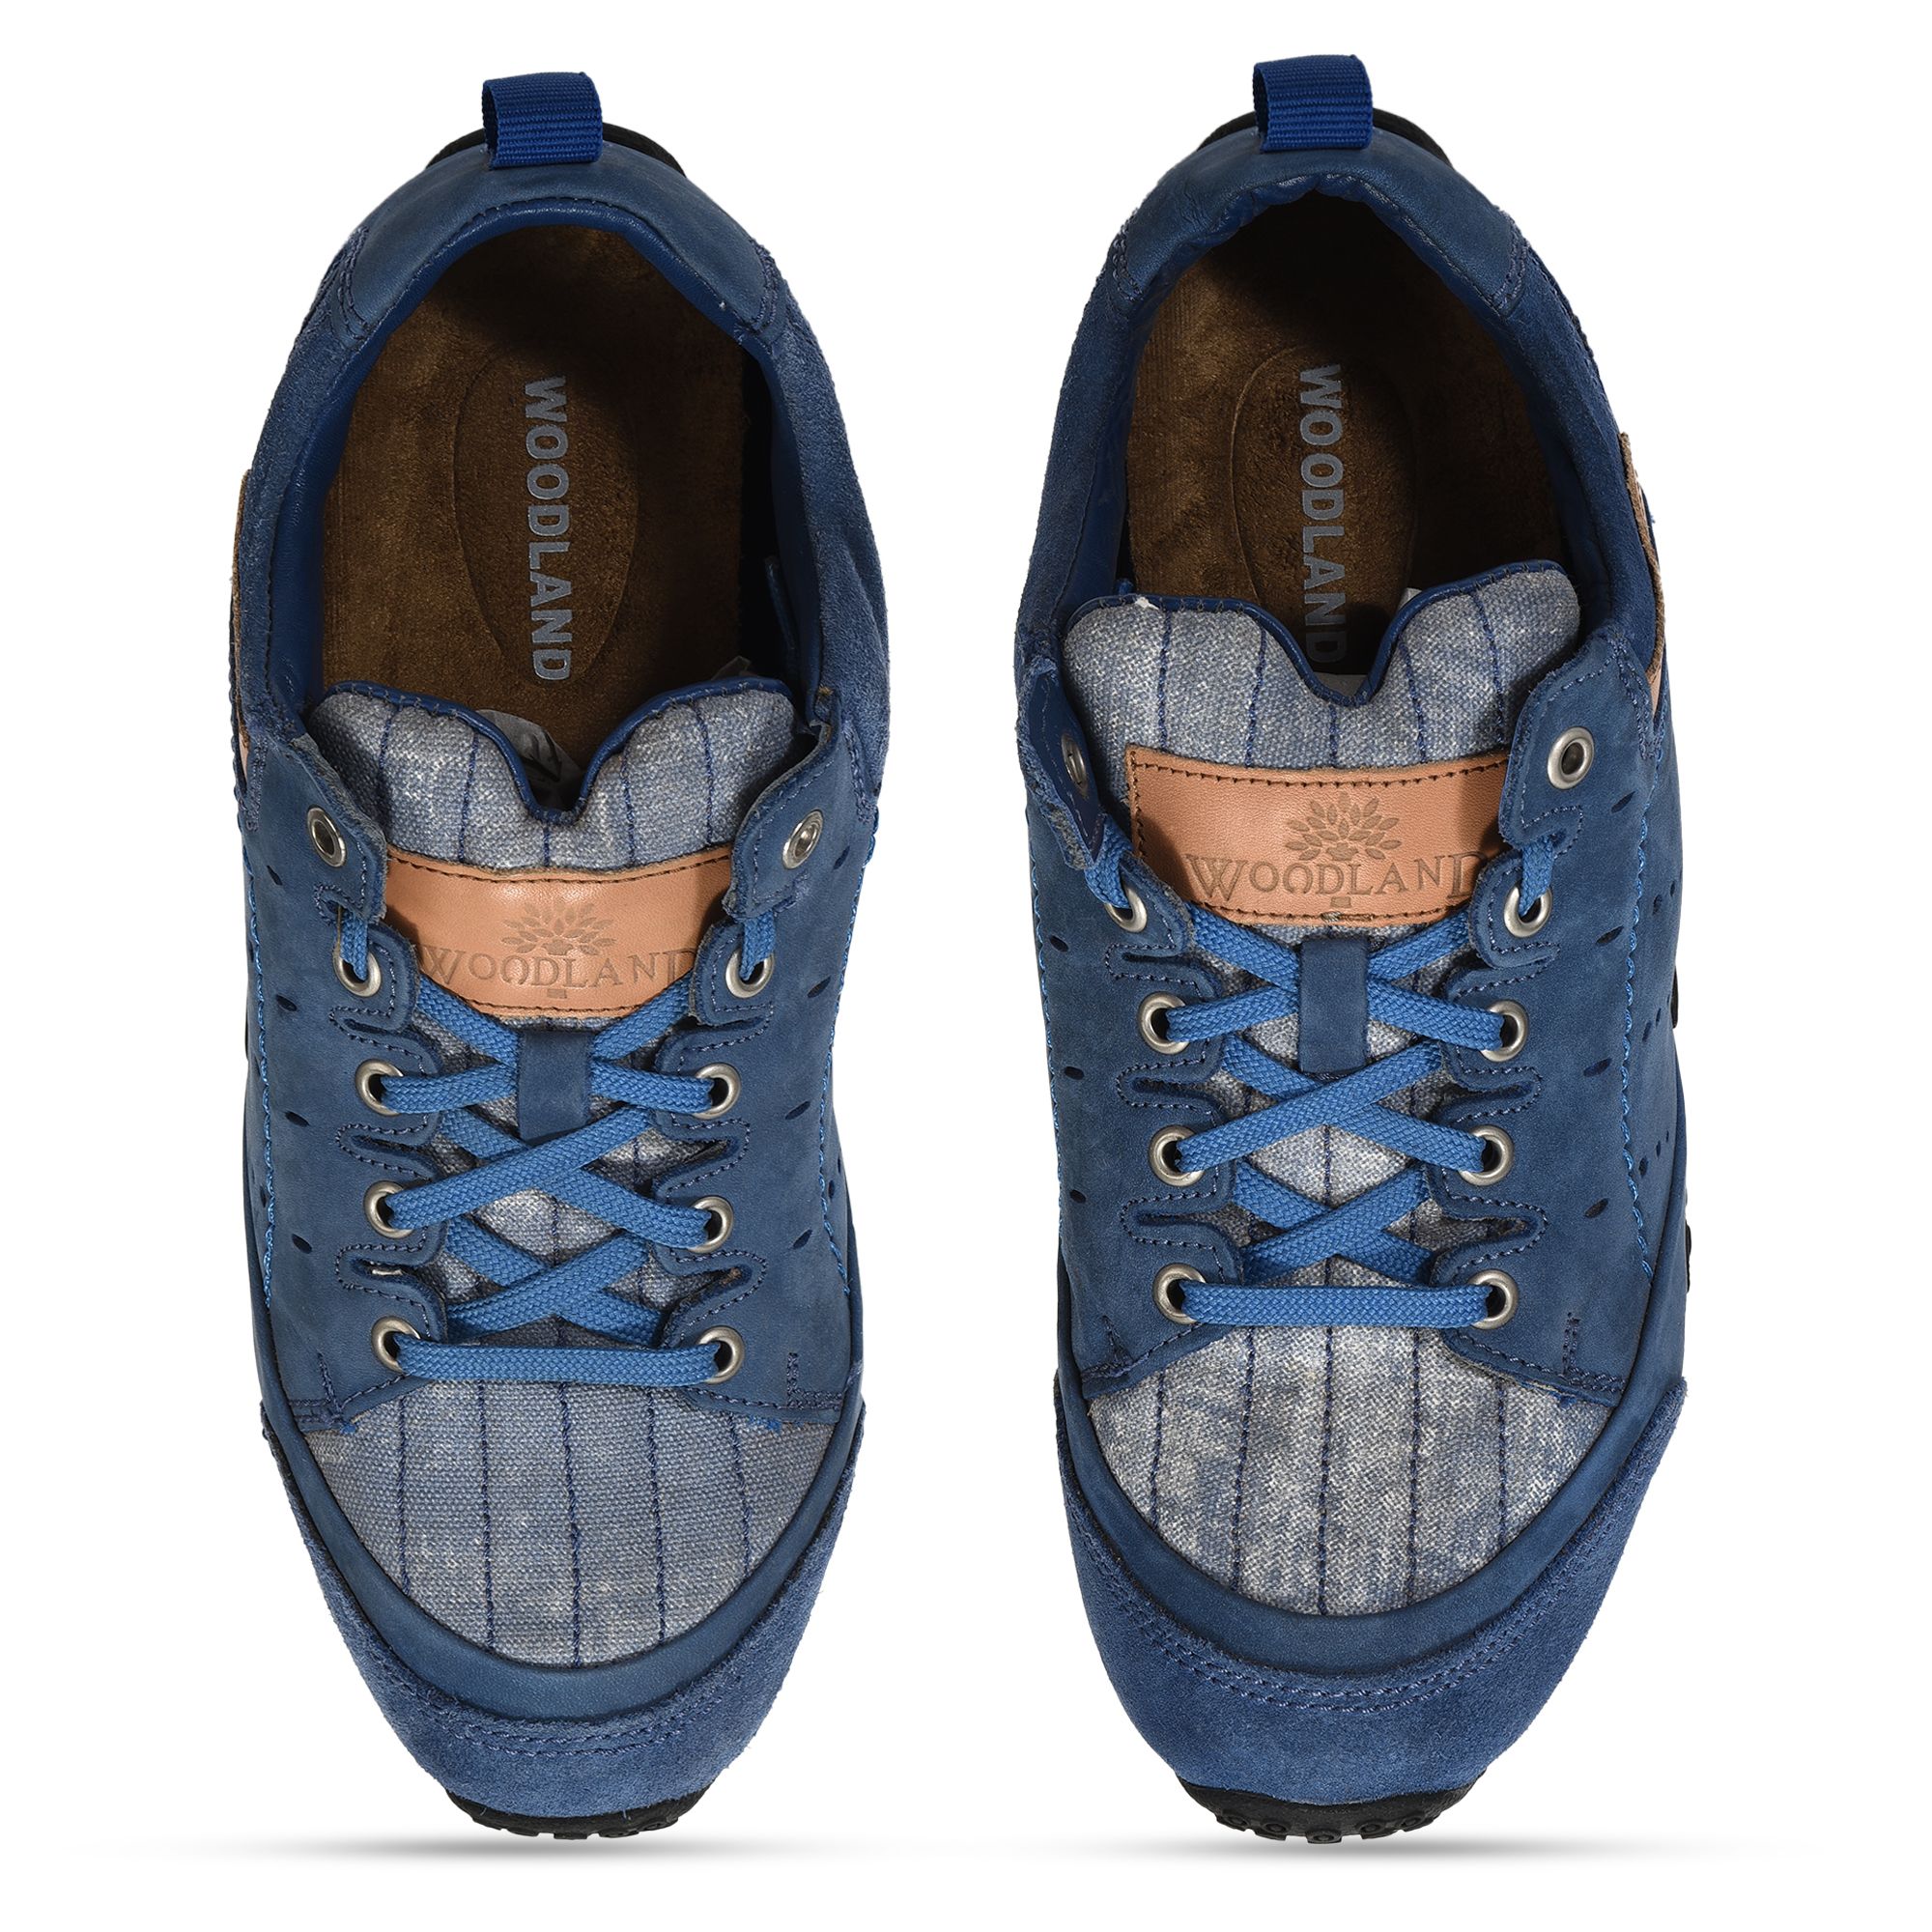 Woodland Sneakers For Men: सॉलिड क्वालिटी वाले ये जूते आपको देंगे जबरदस्त  परफॉर्मेंस, देखें विकल्प | best woodland sneakers for men ideal for  professional casual and adventure purposes ...